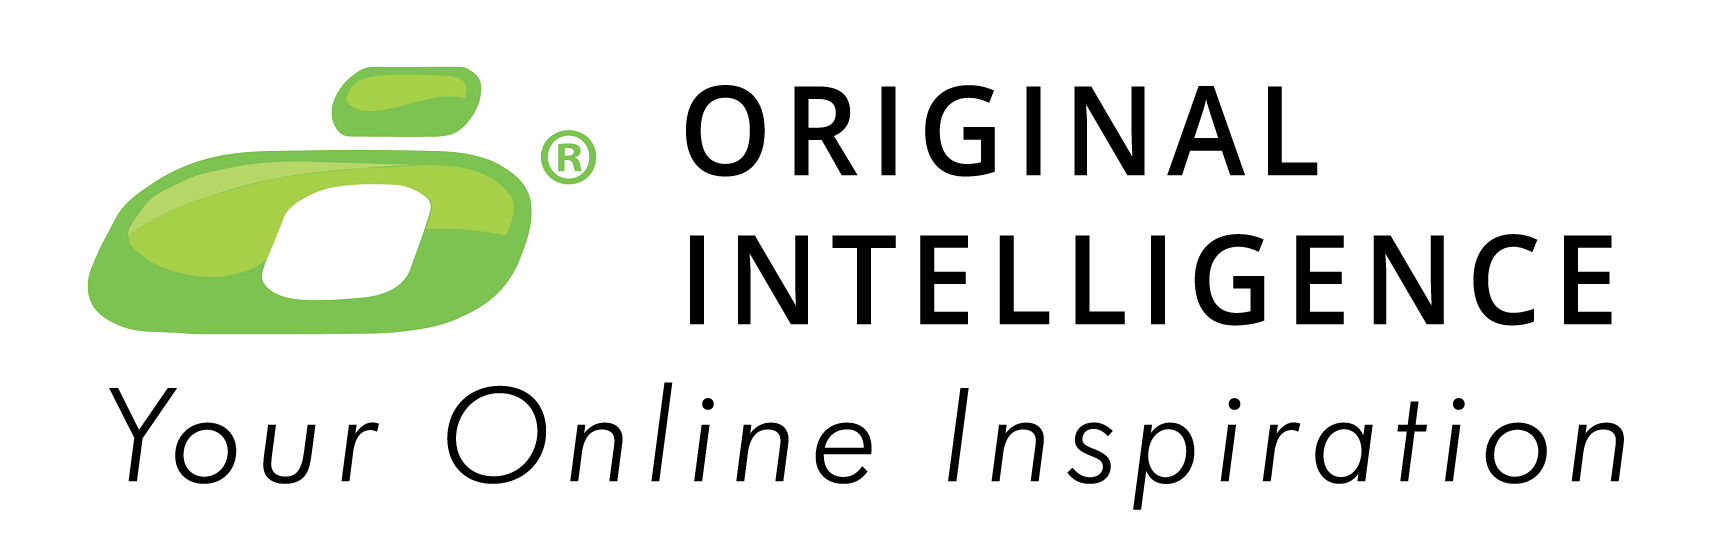 original intelligence logo